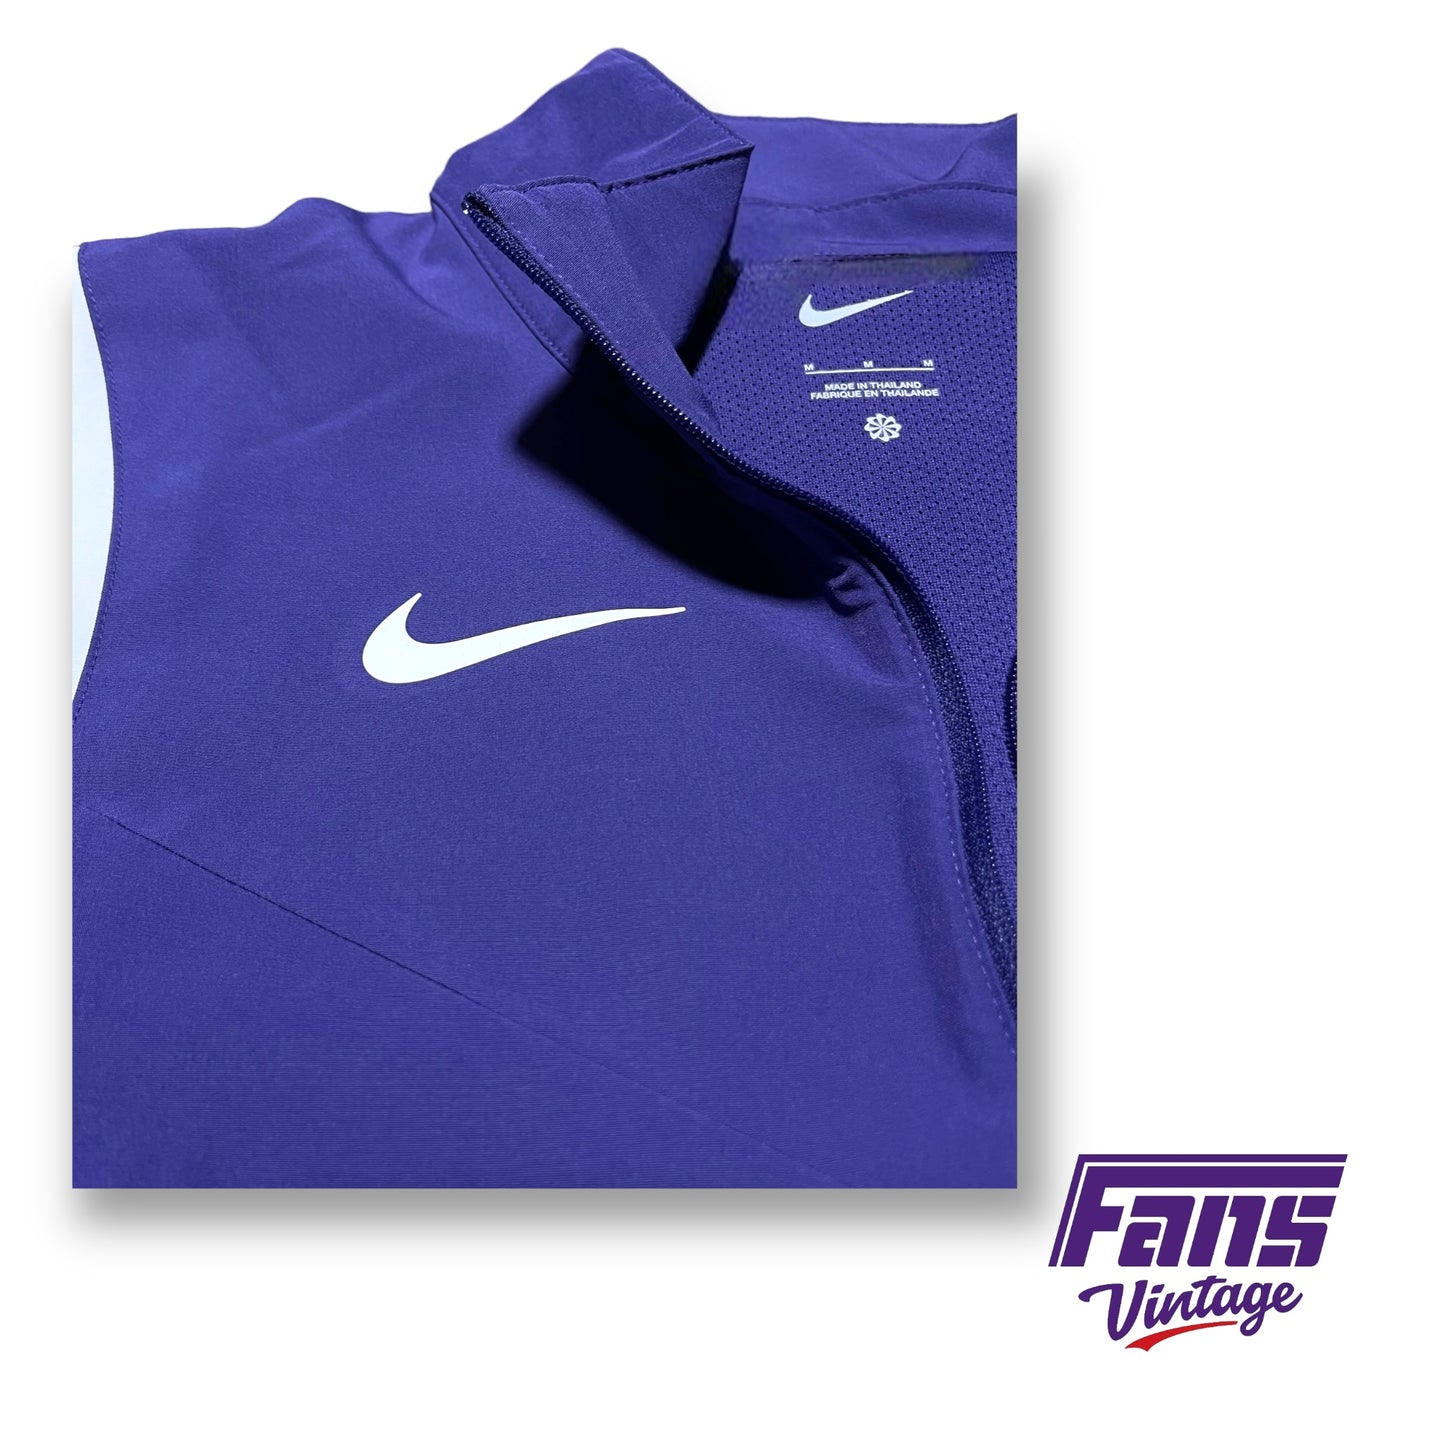 RARE Coach Issued TCU Football Premium Nike Sideline 1/4 Zip Pullover